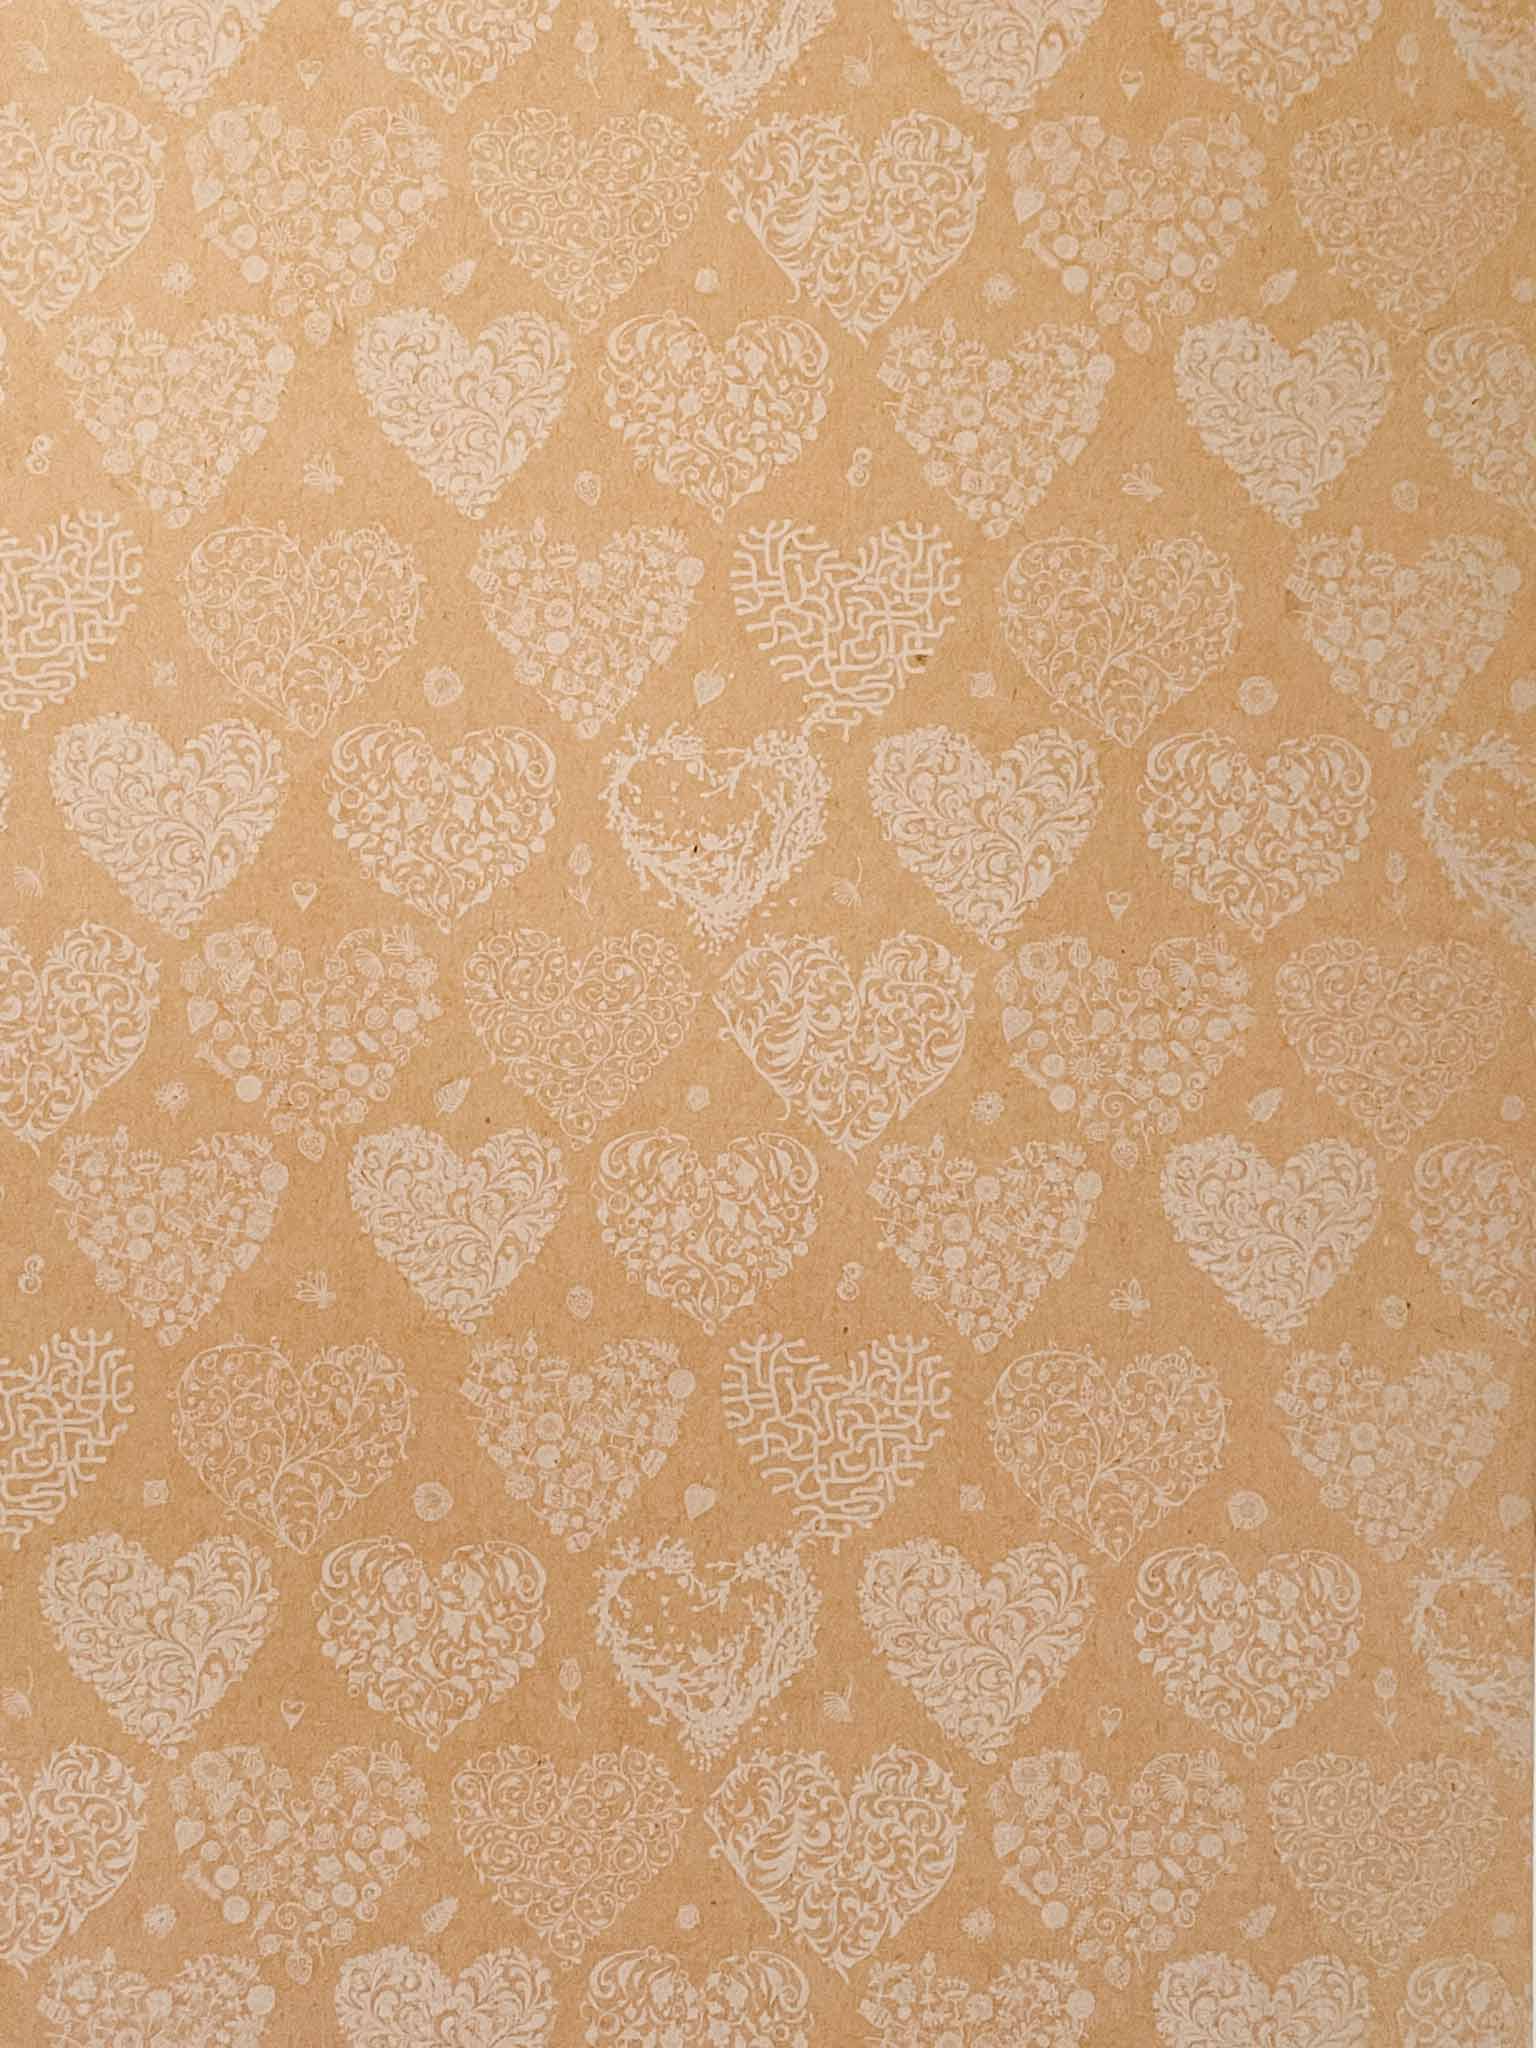 Hearts on Kraft Paper  ImagineDIY   